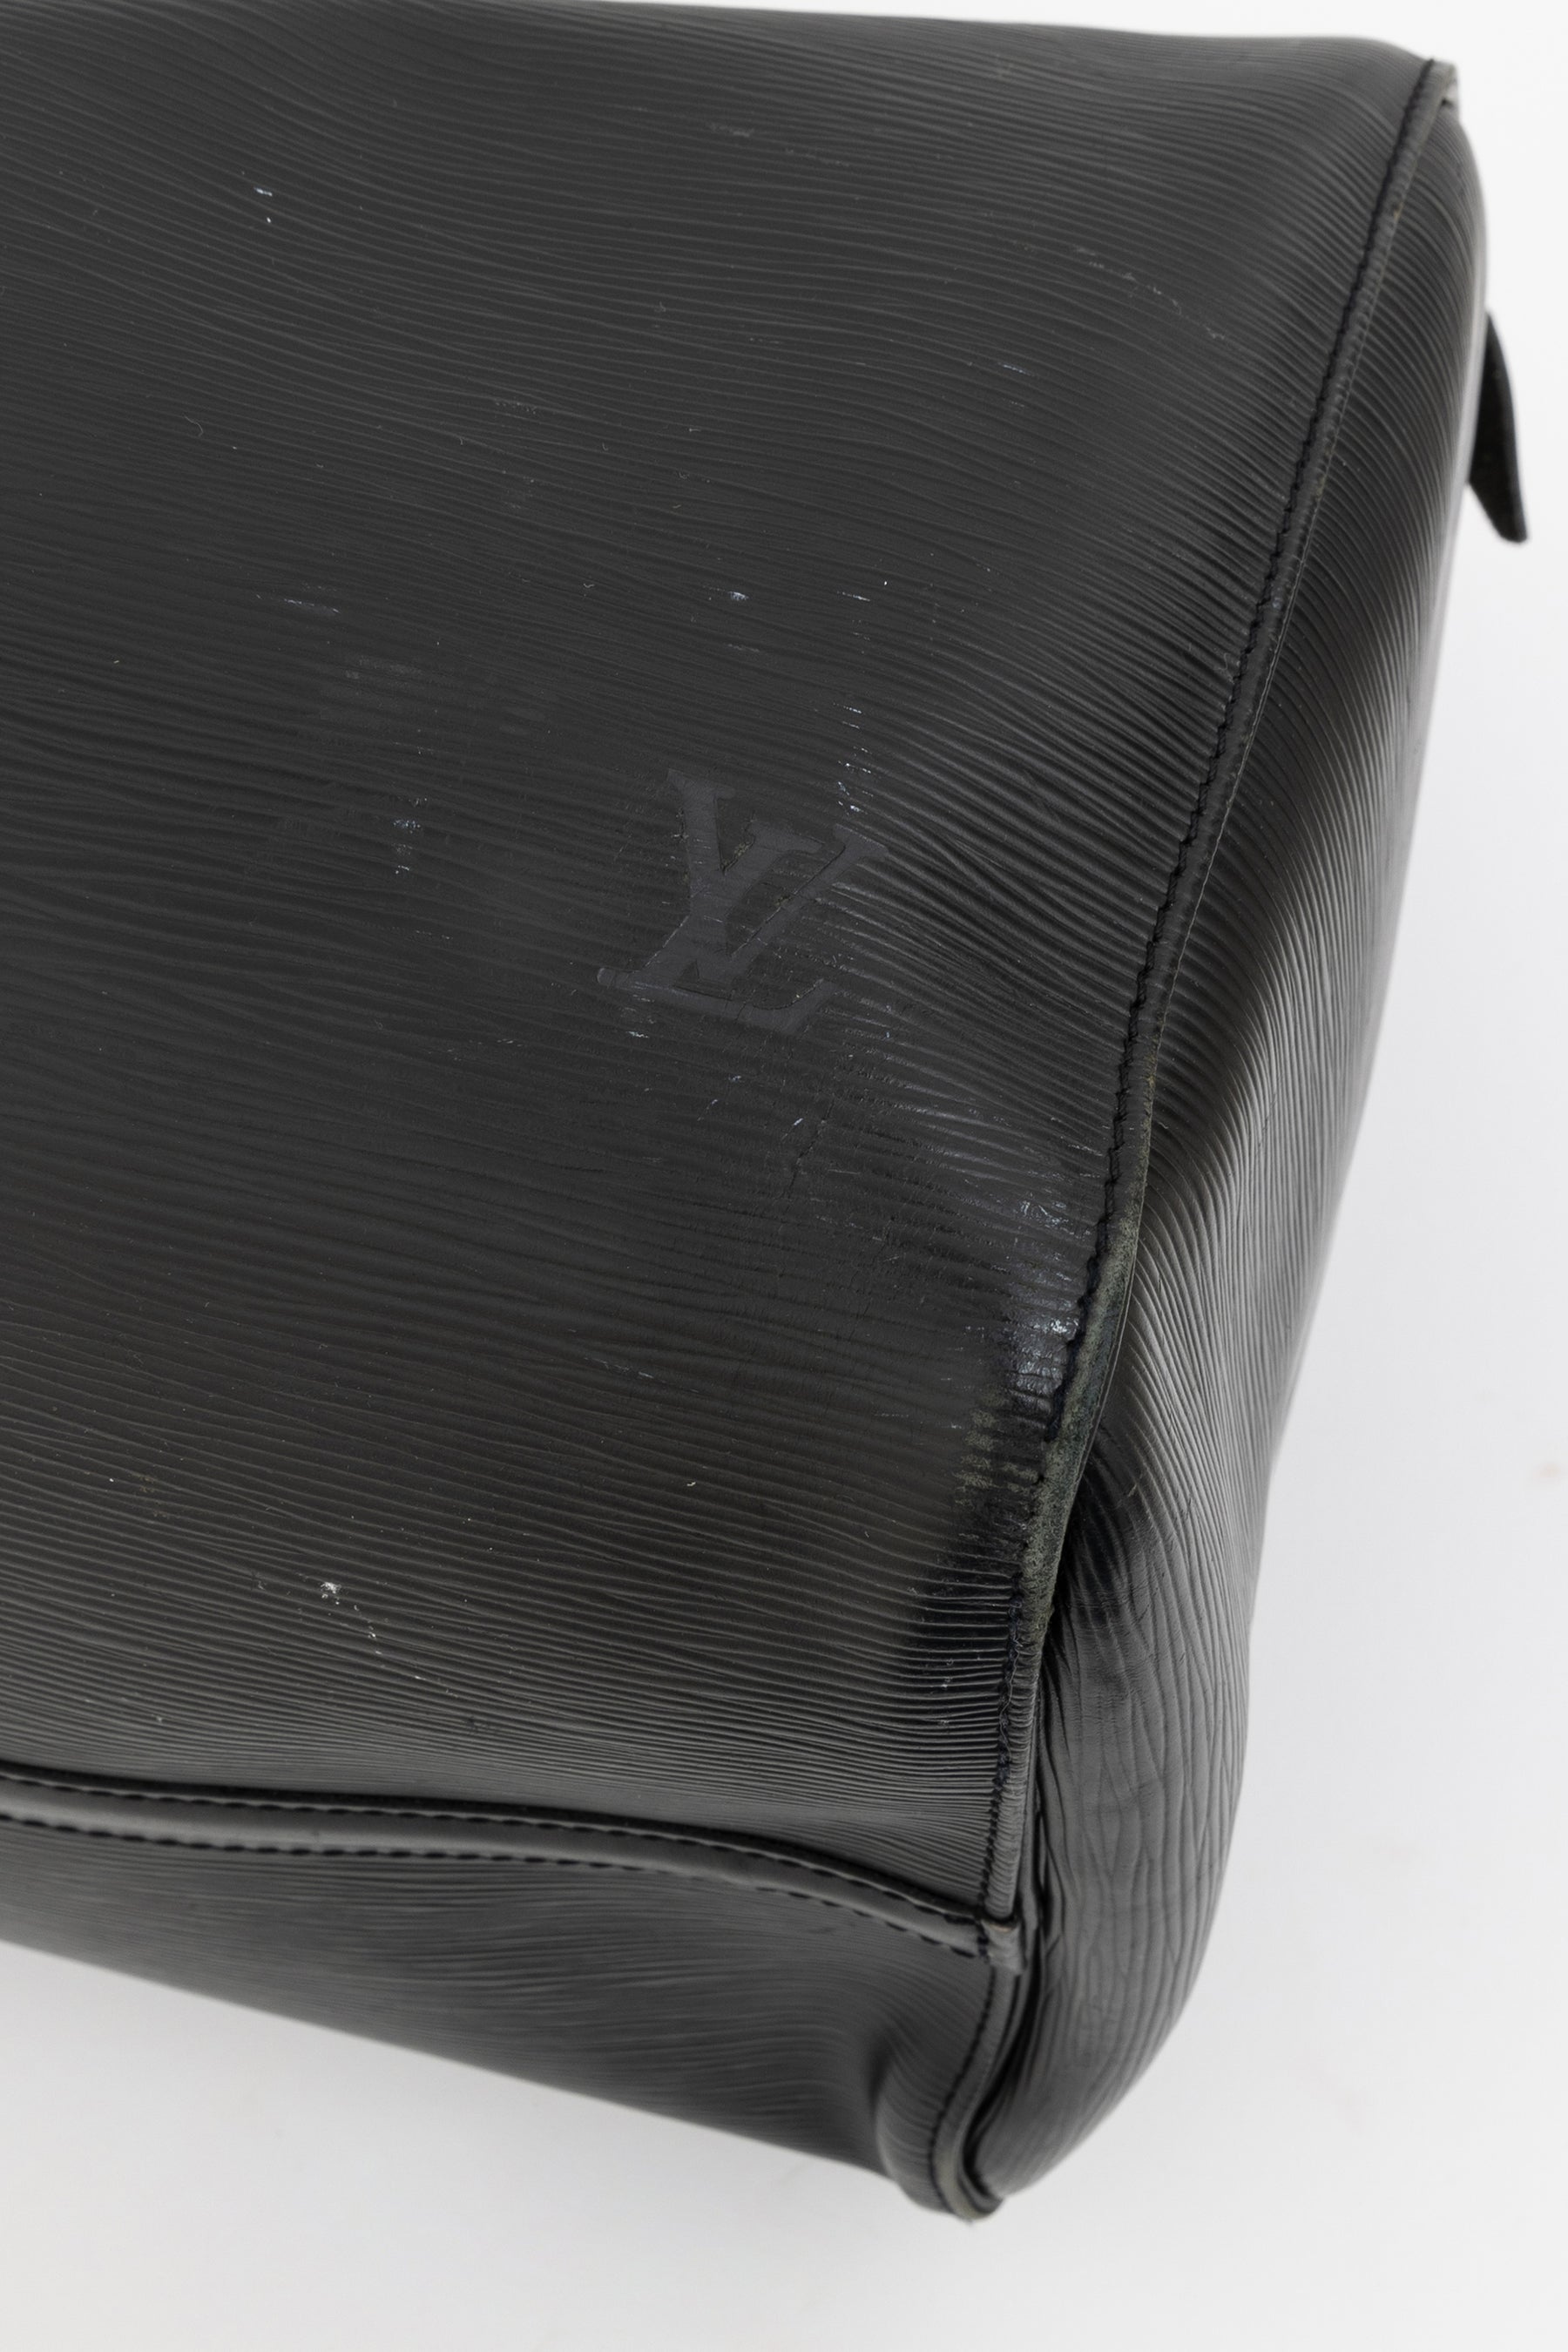 Epi Leather Keep-All 48 Hour Travel Bag